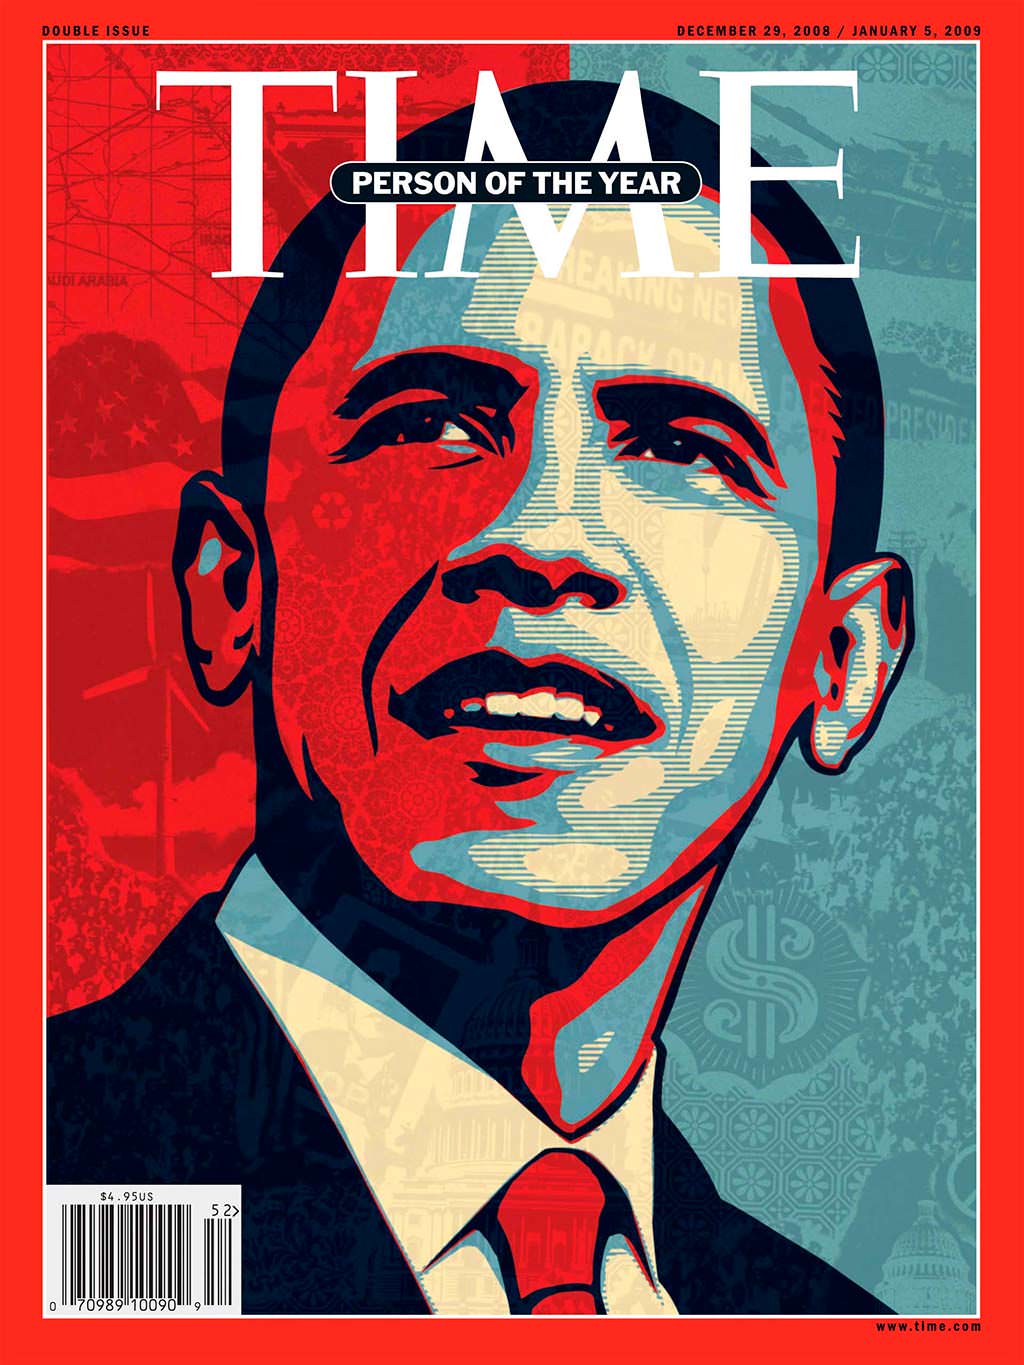 2008 год. 44-й президент США Барак Обама на обложке Time